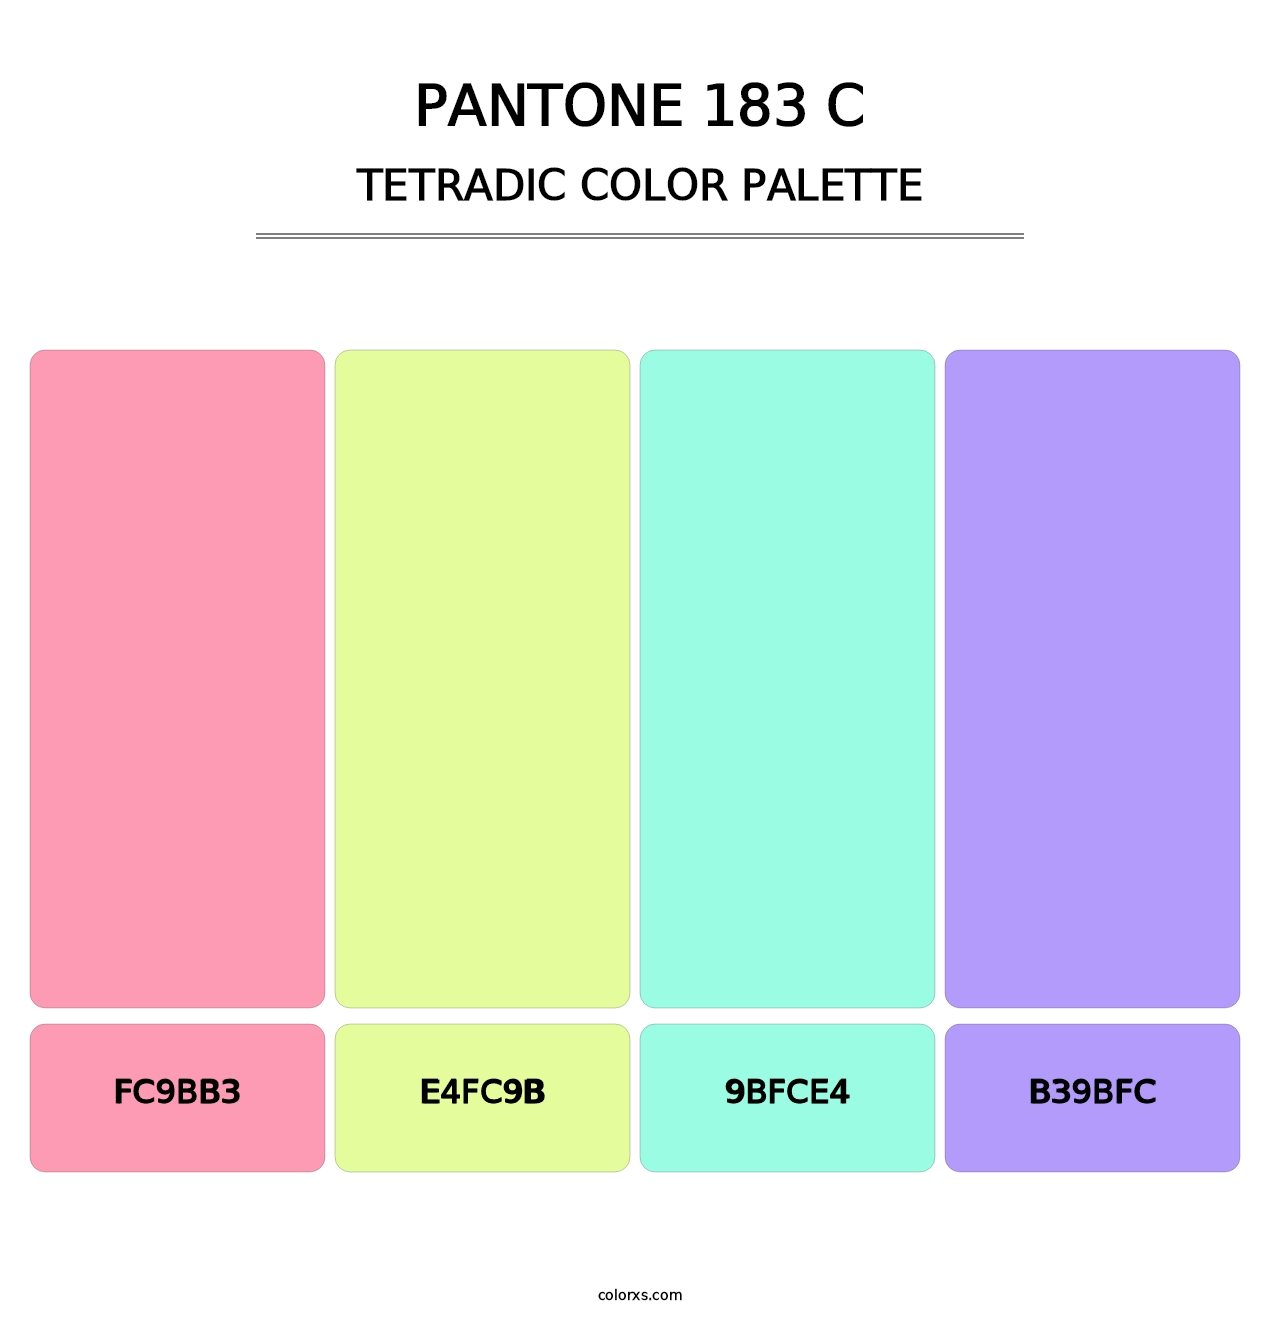 PANTONE 183 C - Tetradic Color Palette